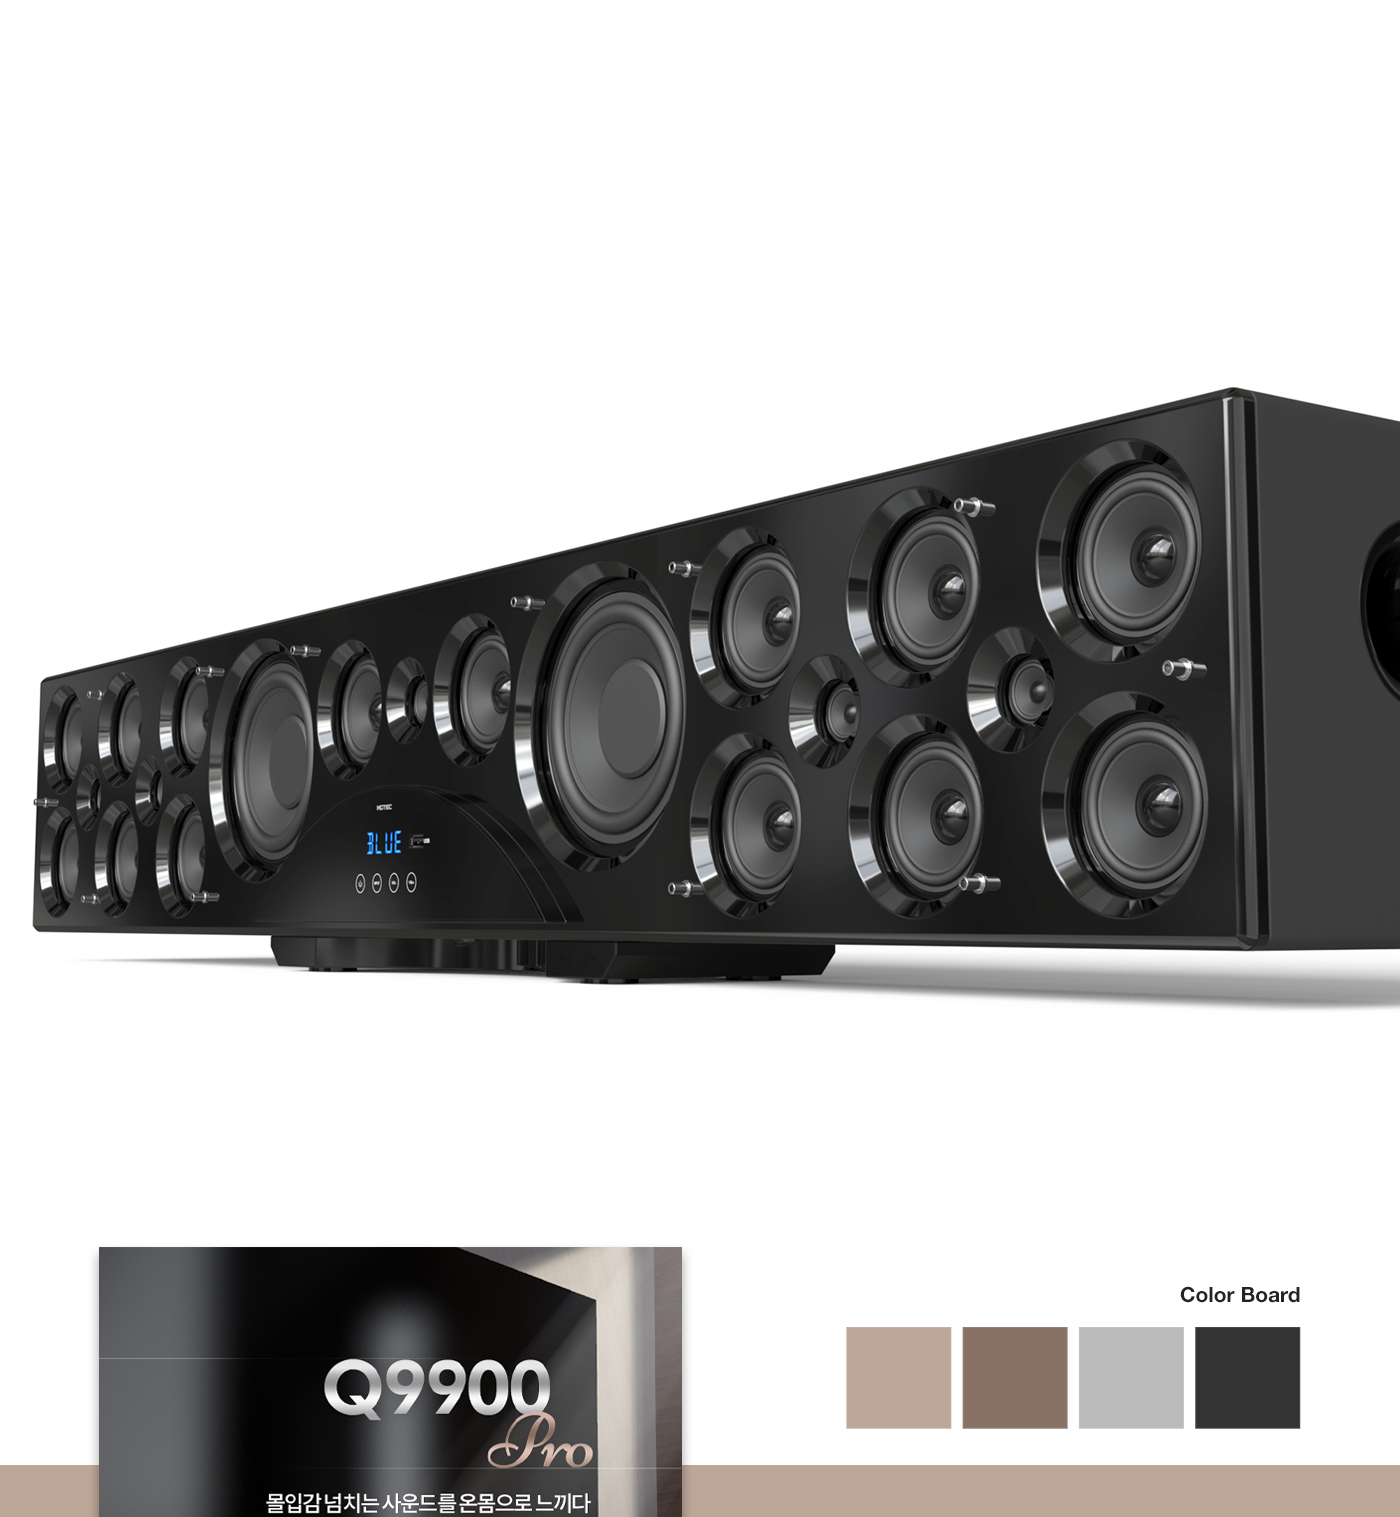 Q9900 Pro Sound Bar 상세페이지, 3D 이미지